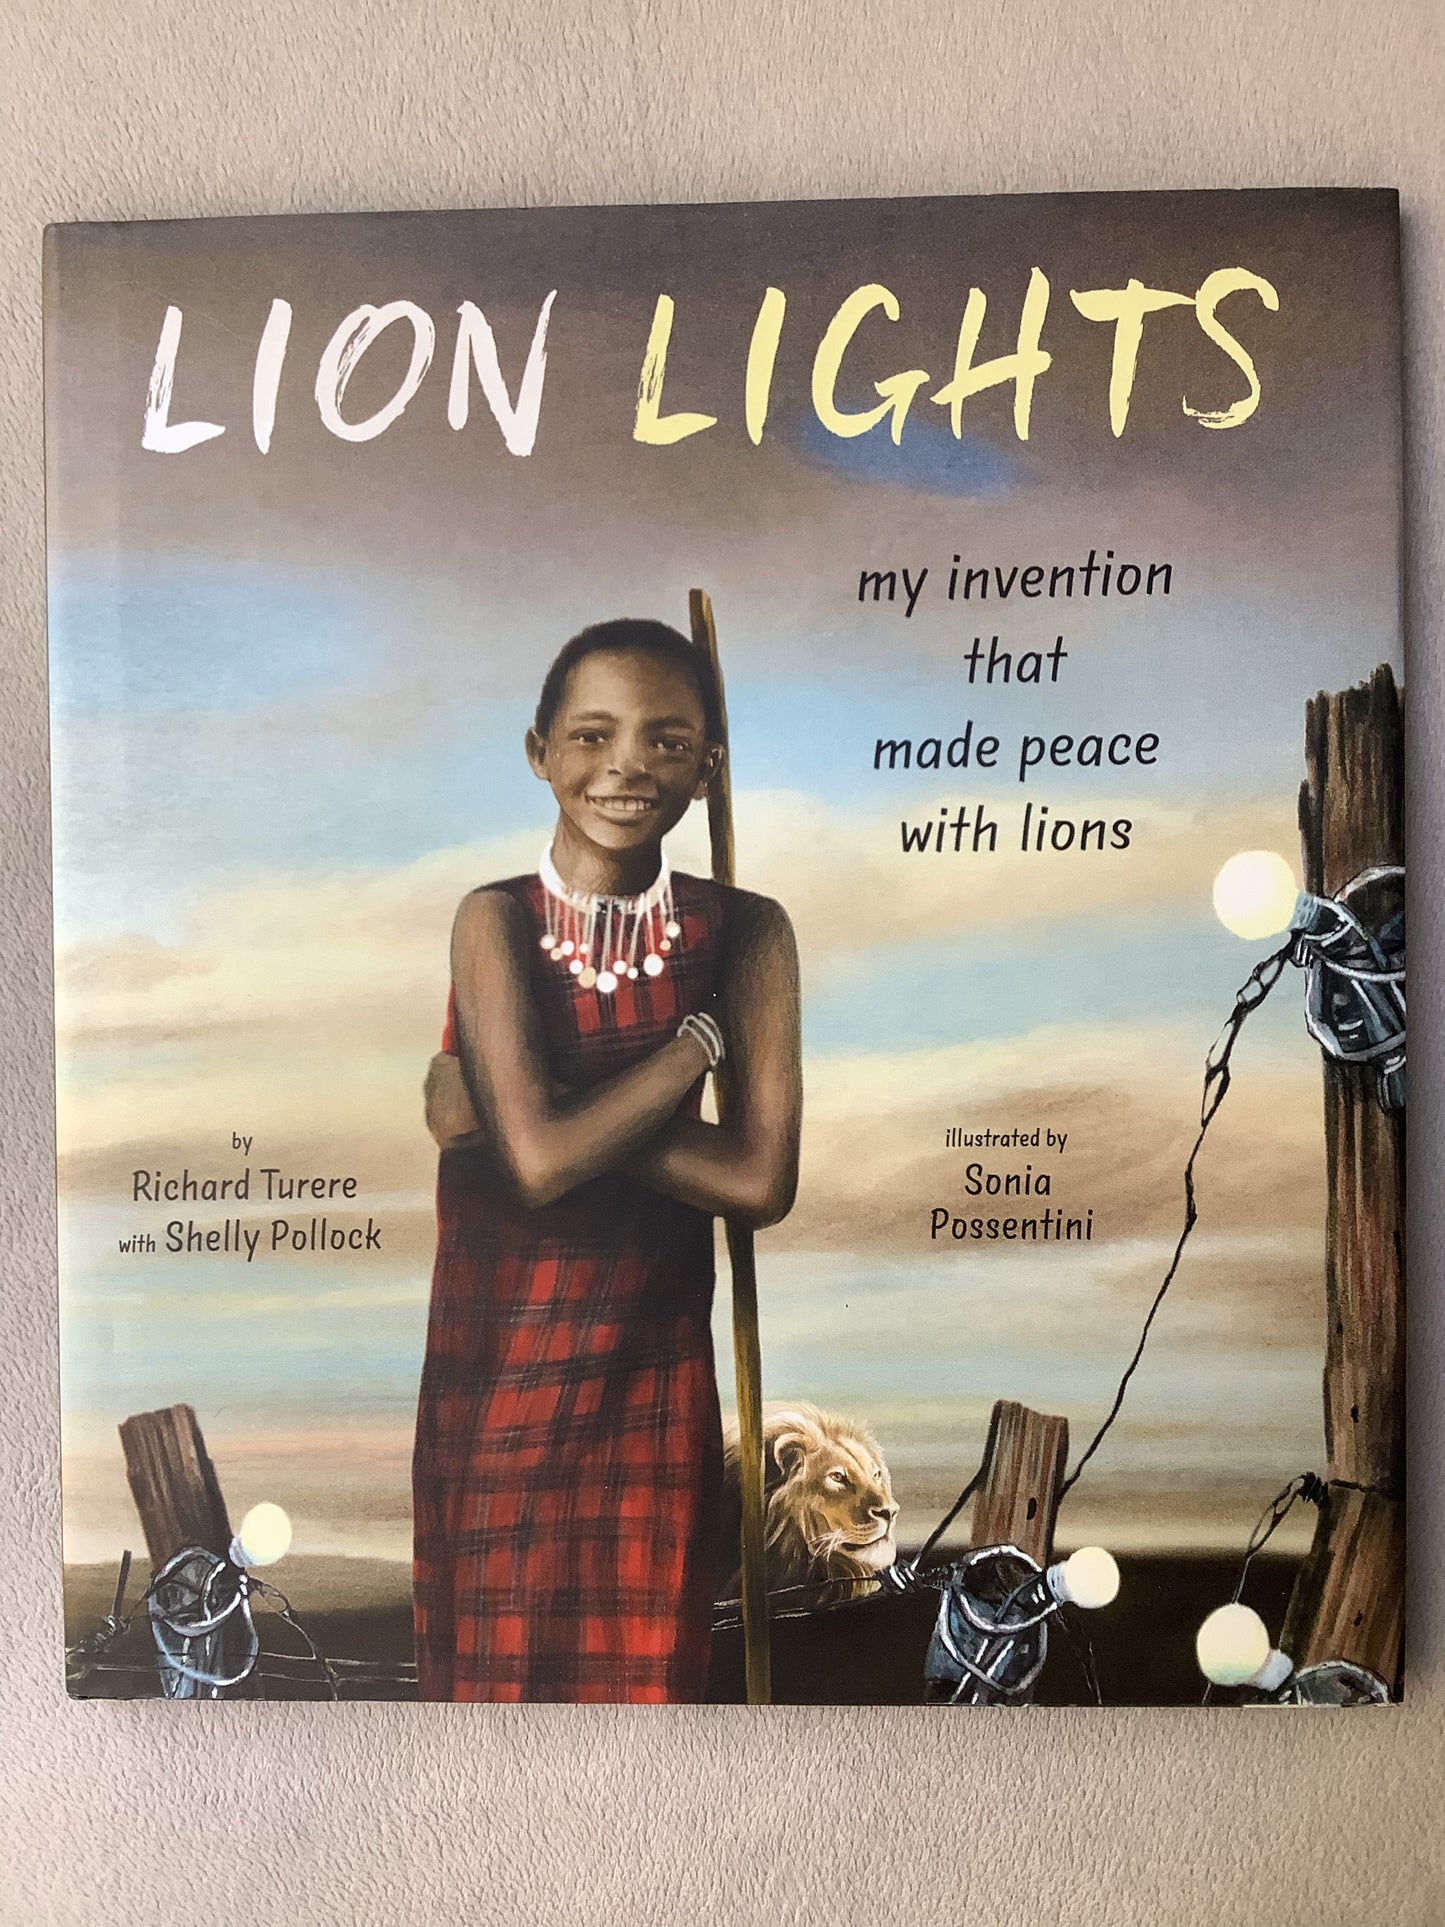 Lion Lights by richard turere